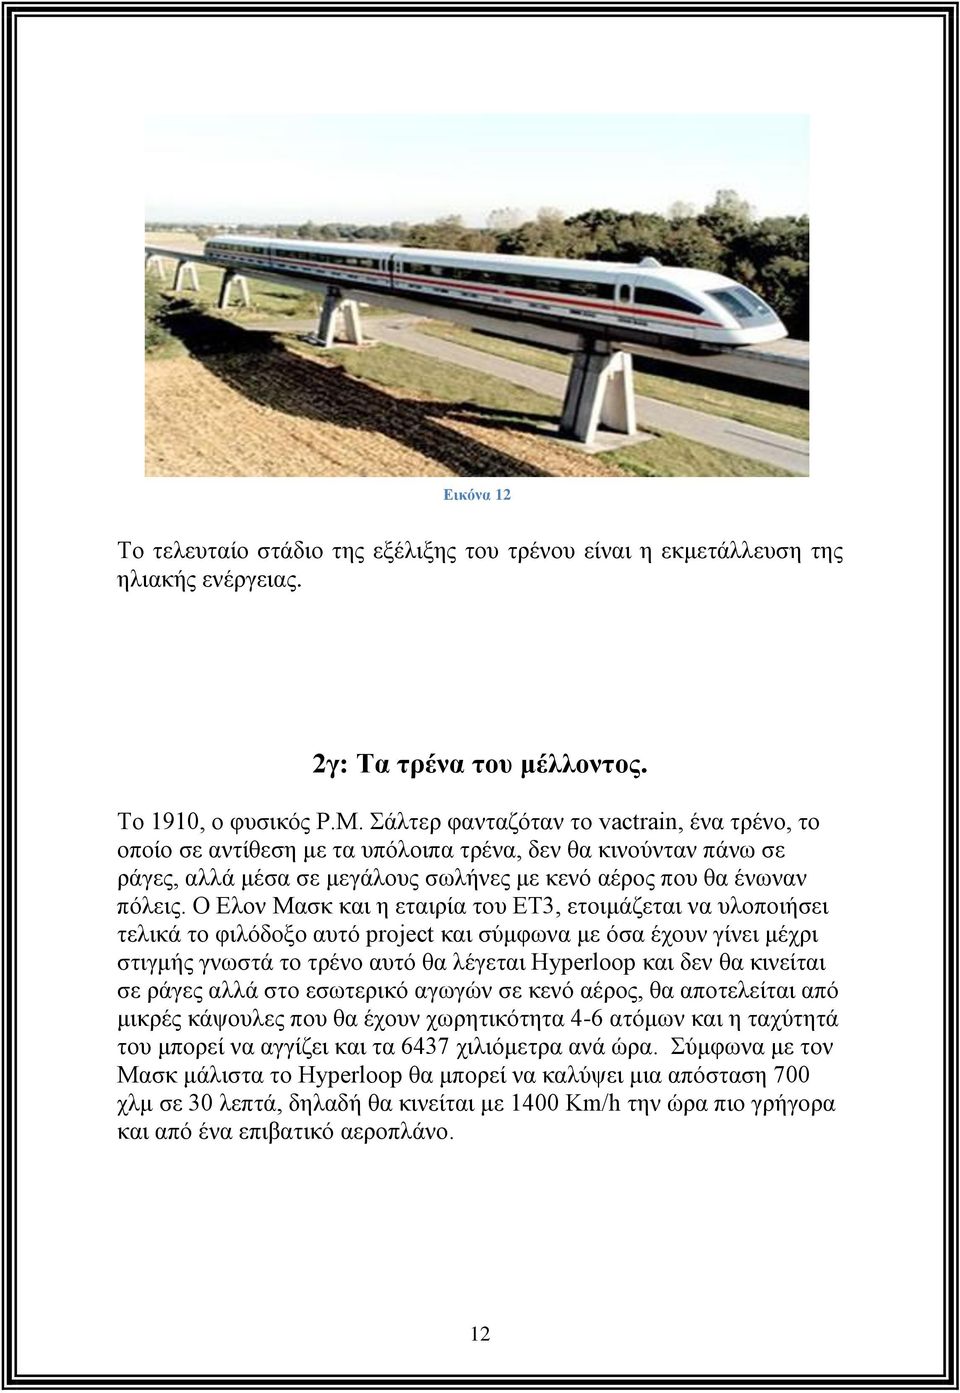 O Ελον Μασκ και η εταιρία του ΕΤ3, ετοιμάζεται να υλοποιήσει τελικά το φιλόδοξο αυτό project και σύμφωνα με όσα έχουν γίνει μέχρι στιγμής γνωστά το τρένο αυτό θα λέγεται Hyperloop και δεν θα κινείται